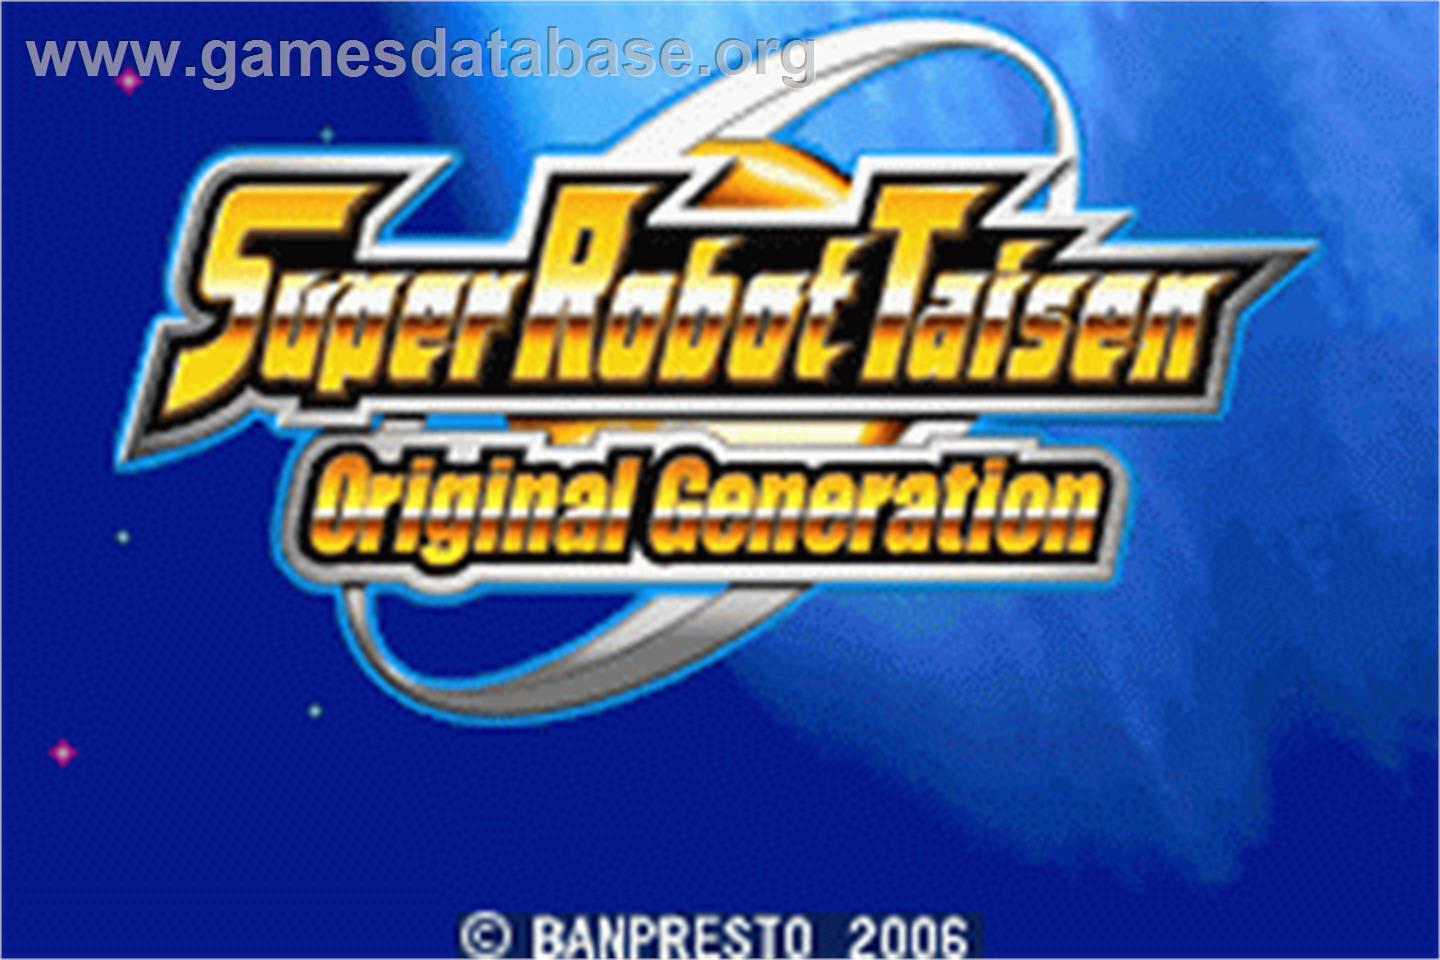 Super Robot Wars: Original Generation - Nintendo Game Boy Advance - Artwork - Title Screen